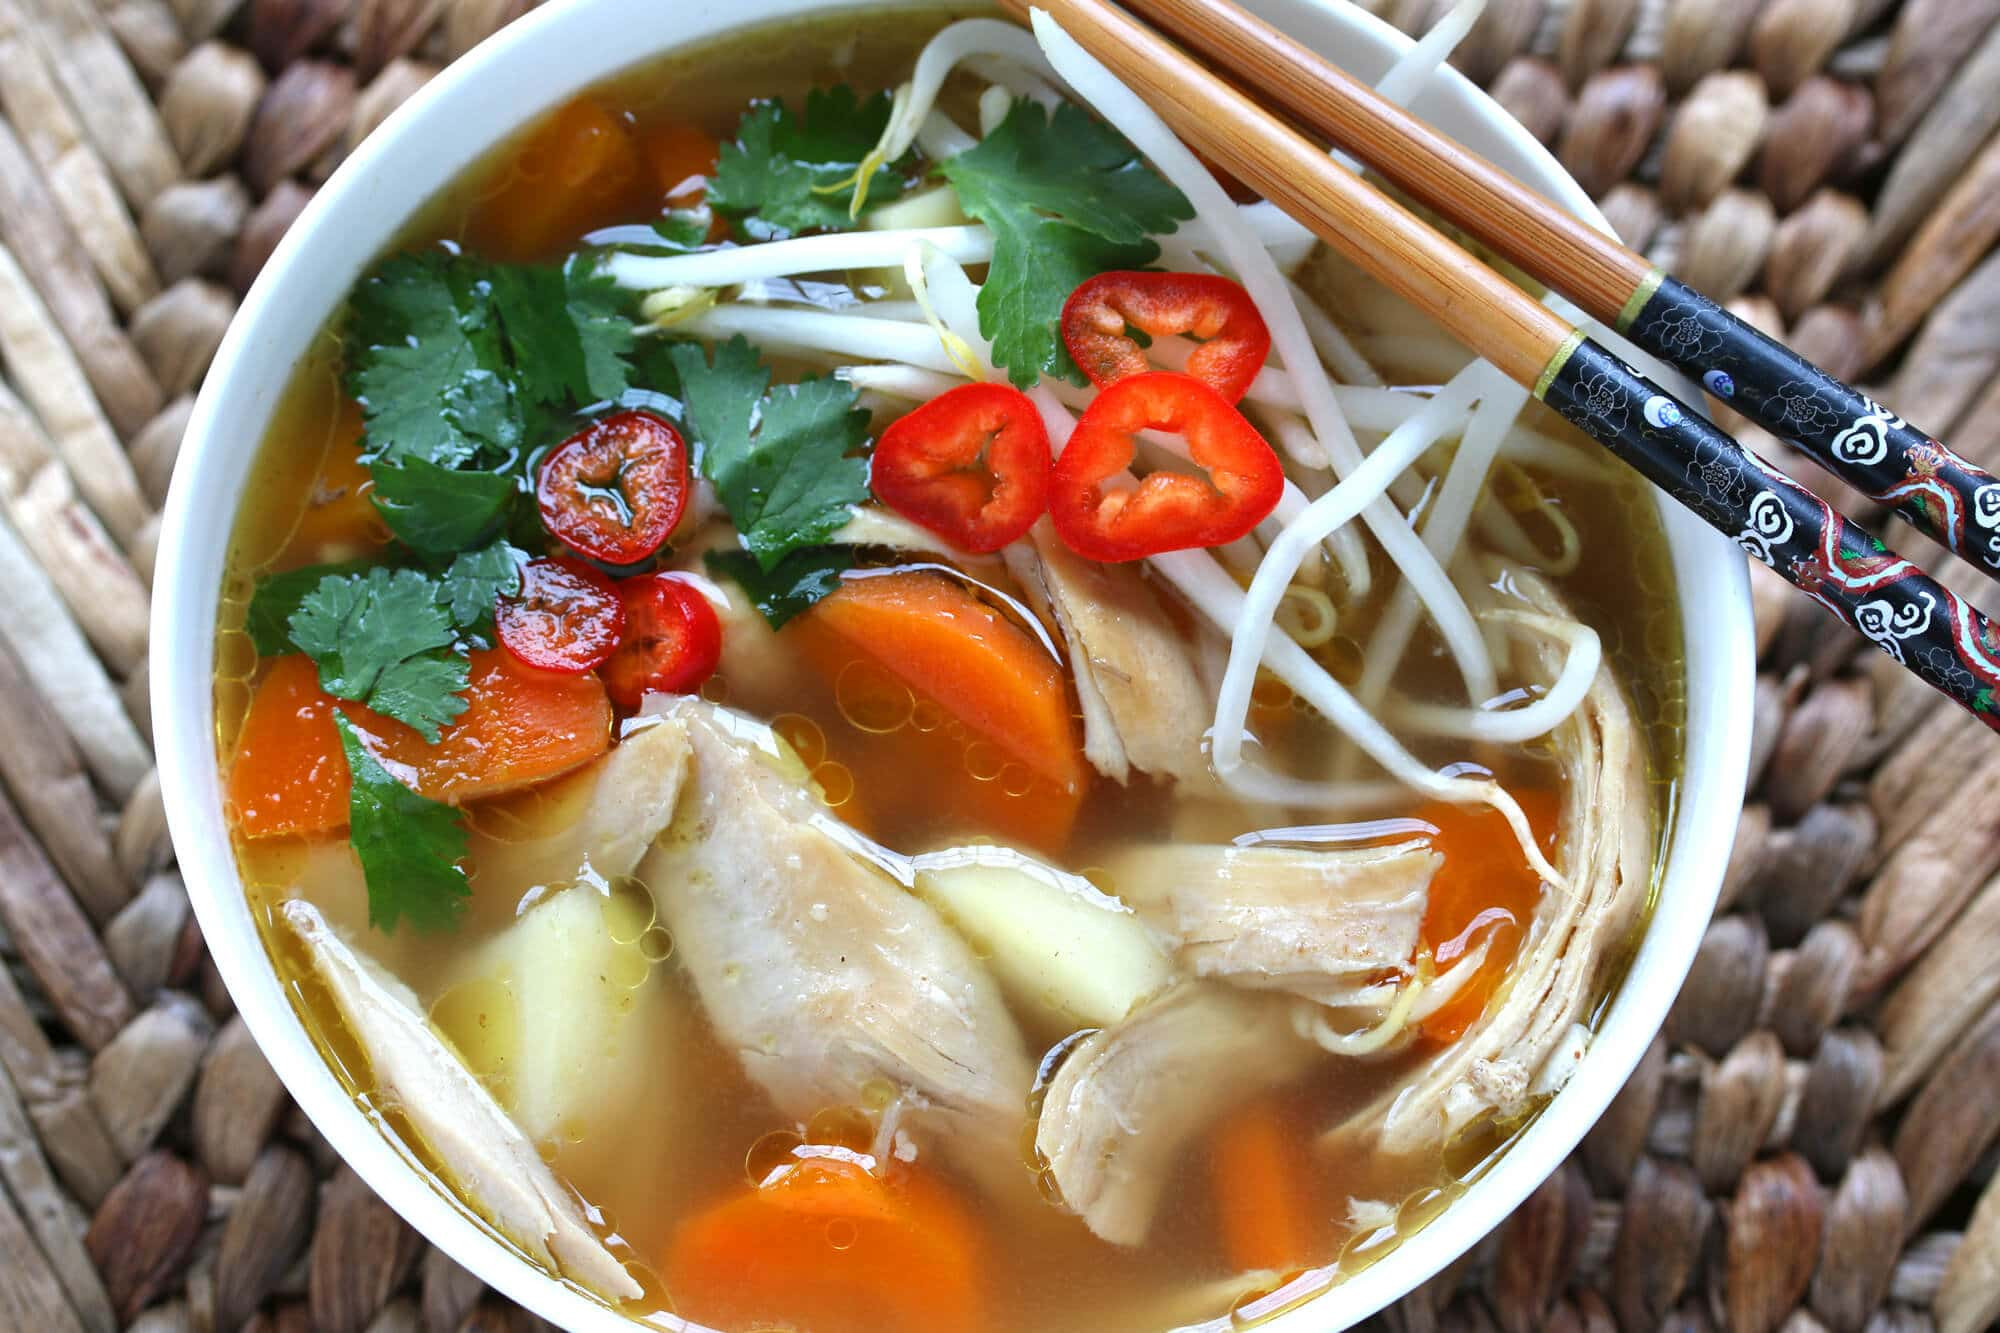 He the soup. Азиатский суп. Суп в азиатском стиле. Азиатской диетическая кухни. Азиатский тайский супчик.